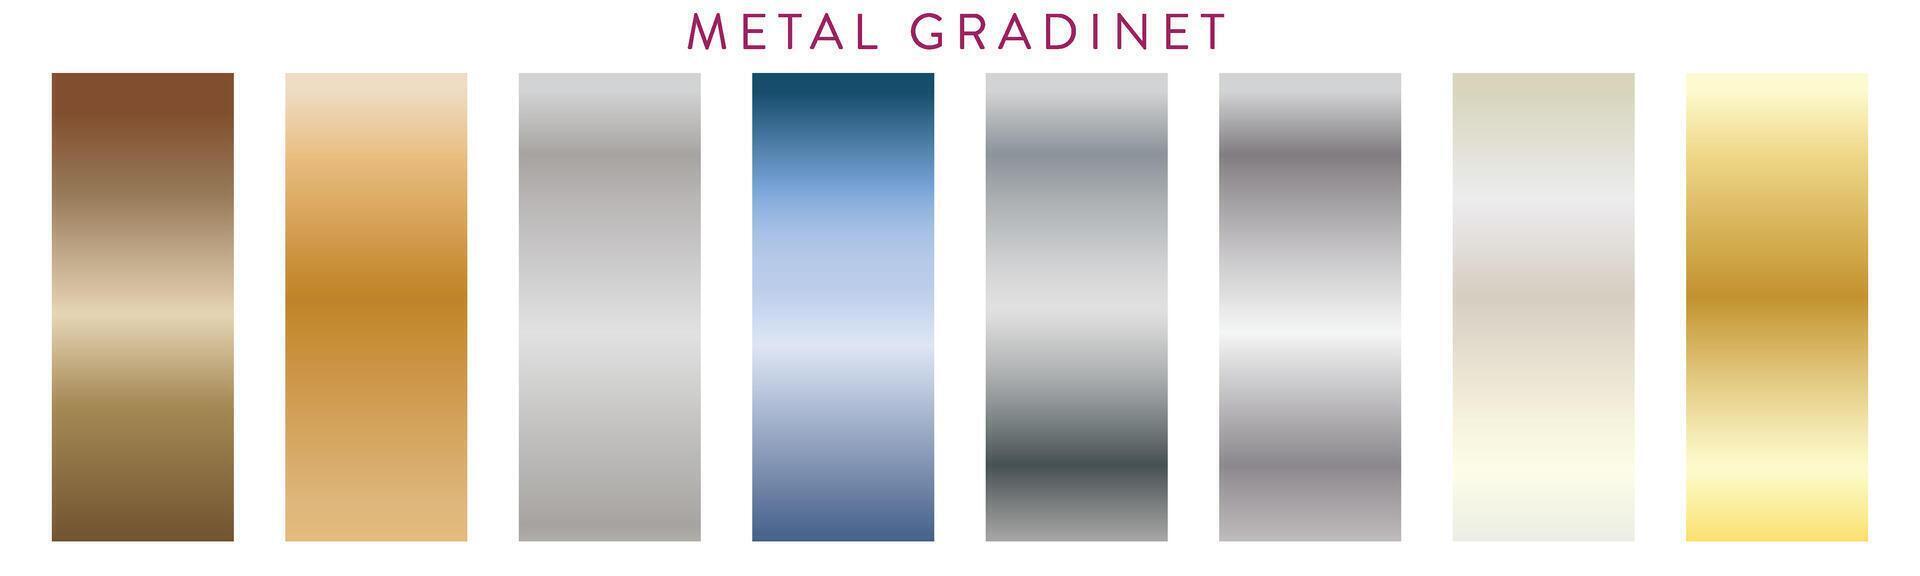 Metallic gradient big set. Shiny metal texture gradation background collection. Elegant, shiny and bright pastel color vector gradient background. Big collection of metal gradation background.